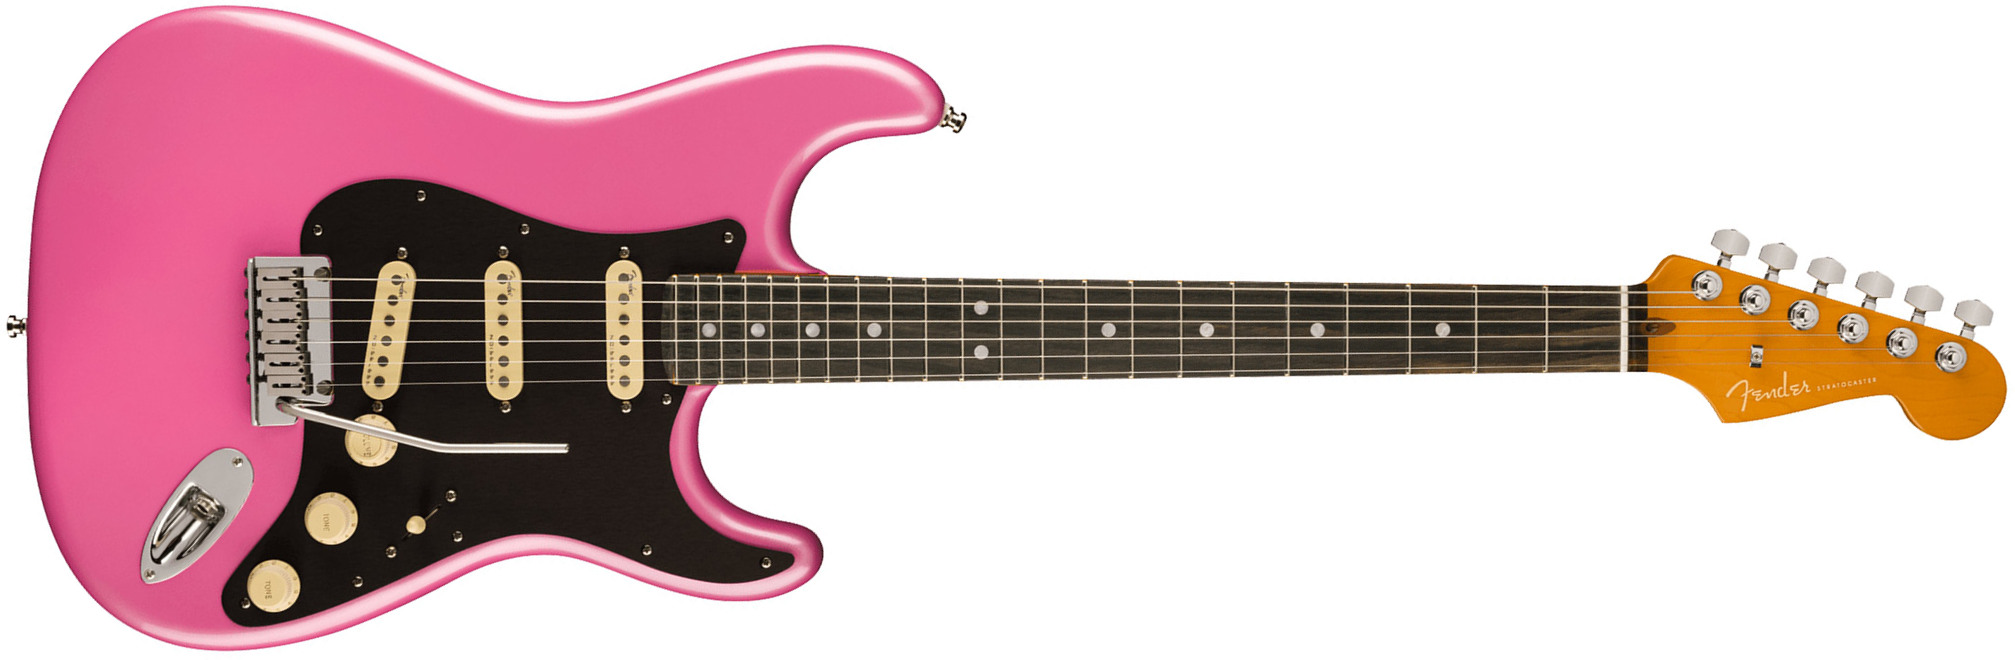 Fender Strat American Ultra Ltd Usa 3s Trem Eb - Bubble Gum Metallic - Guitarra eléctrica con forma de str. - Main picture